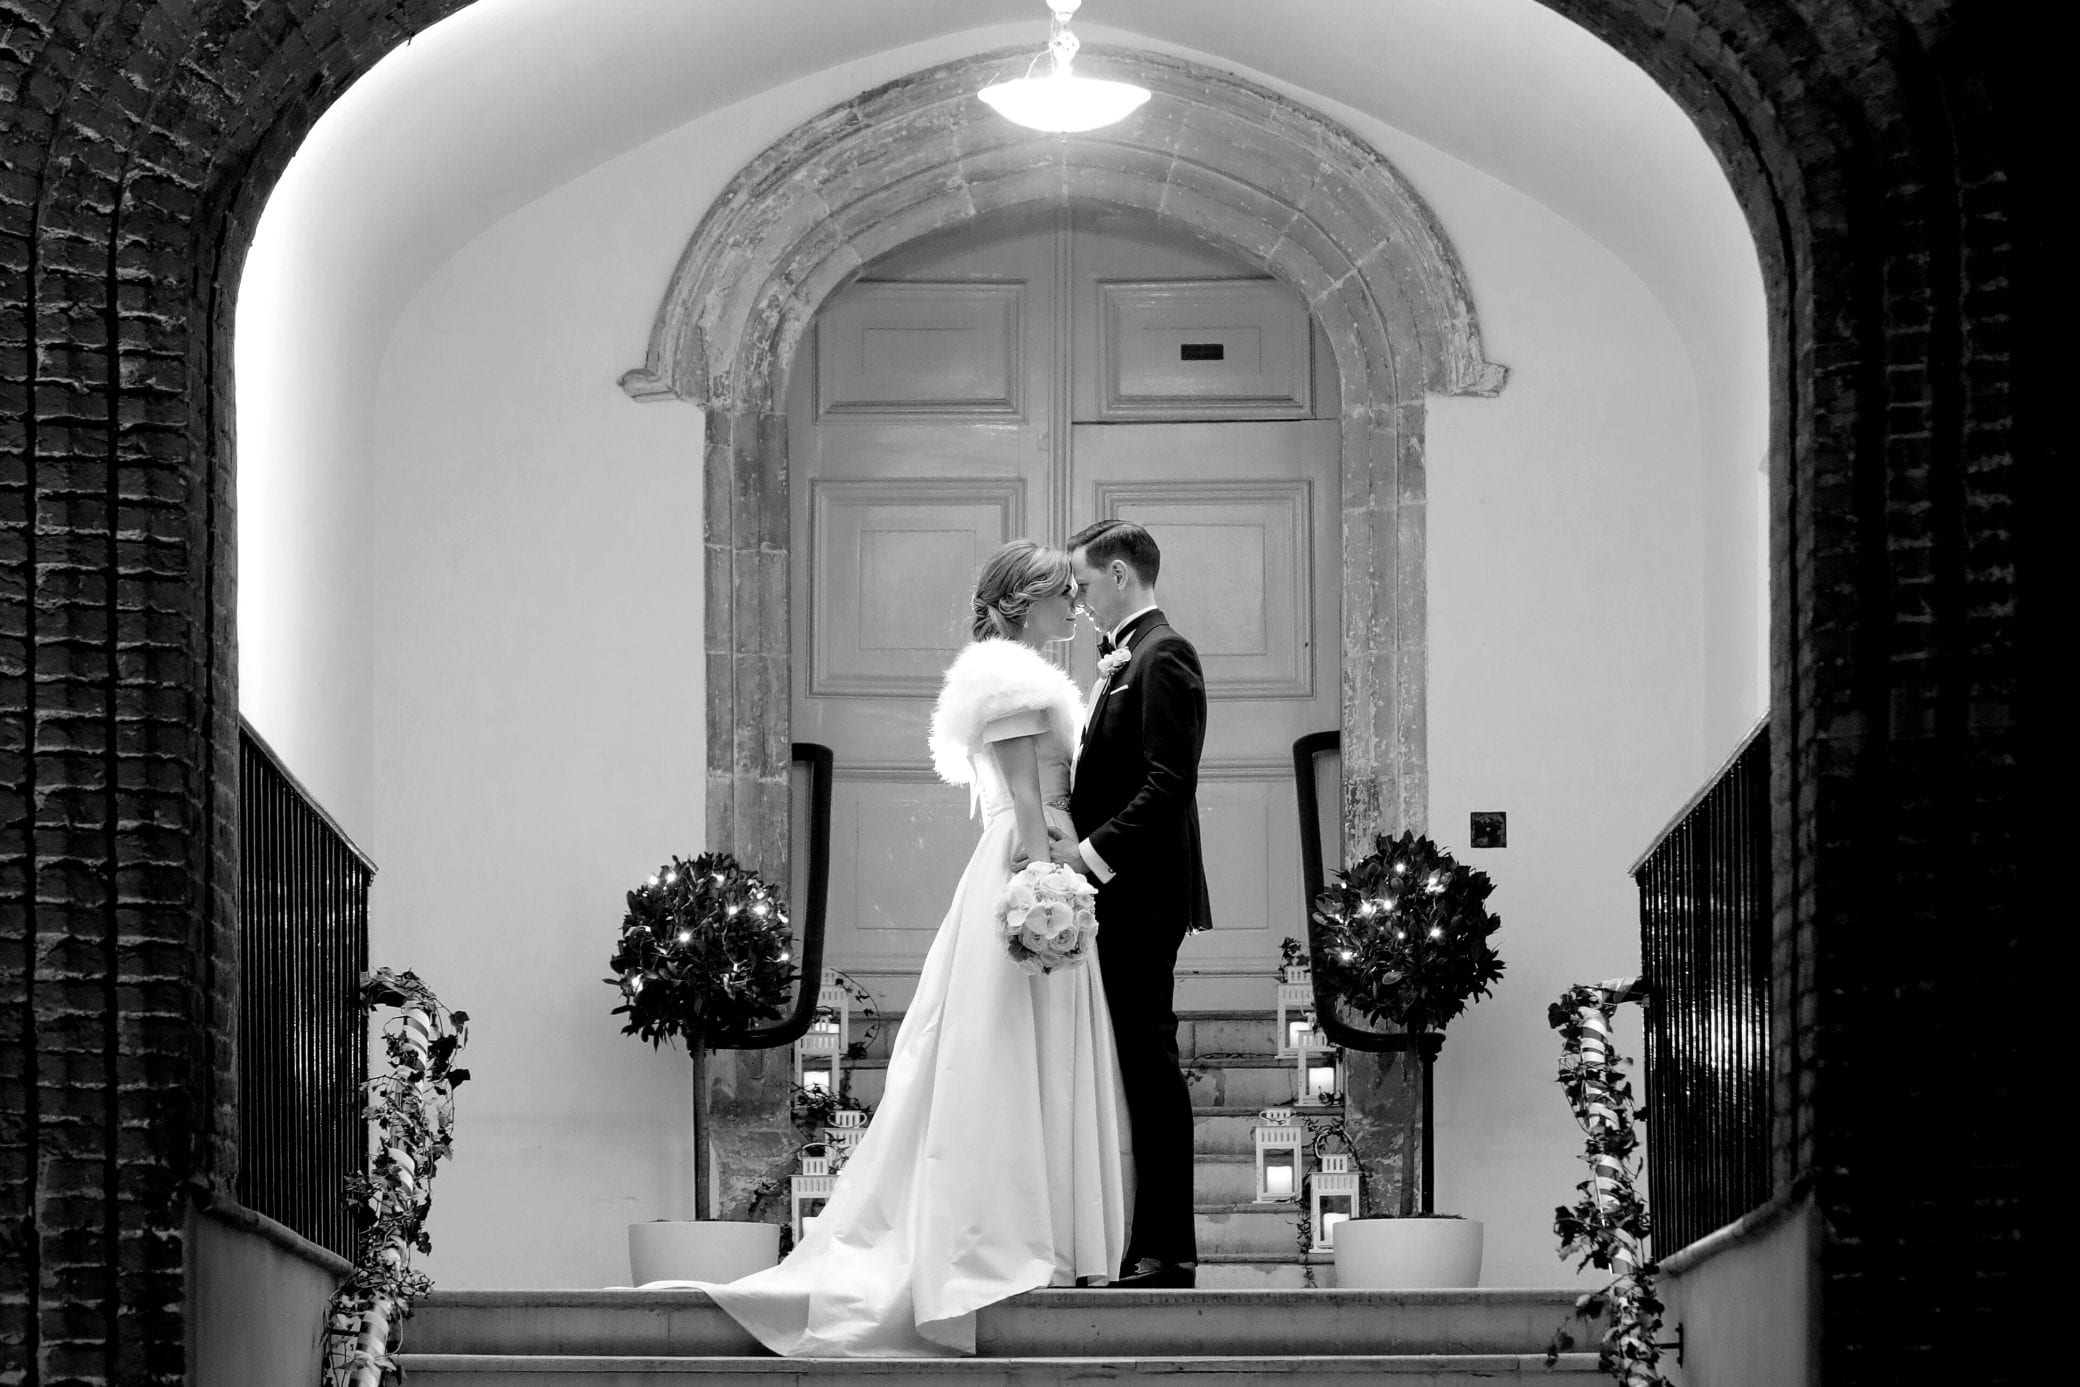 Beautiful wedding photographic opportunities at Farnham Castle